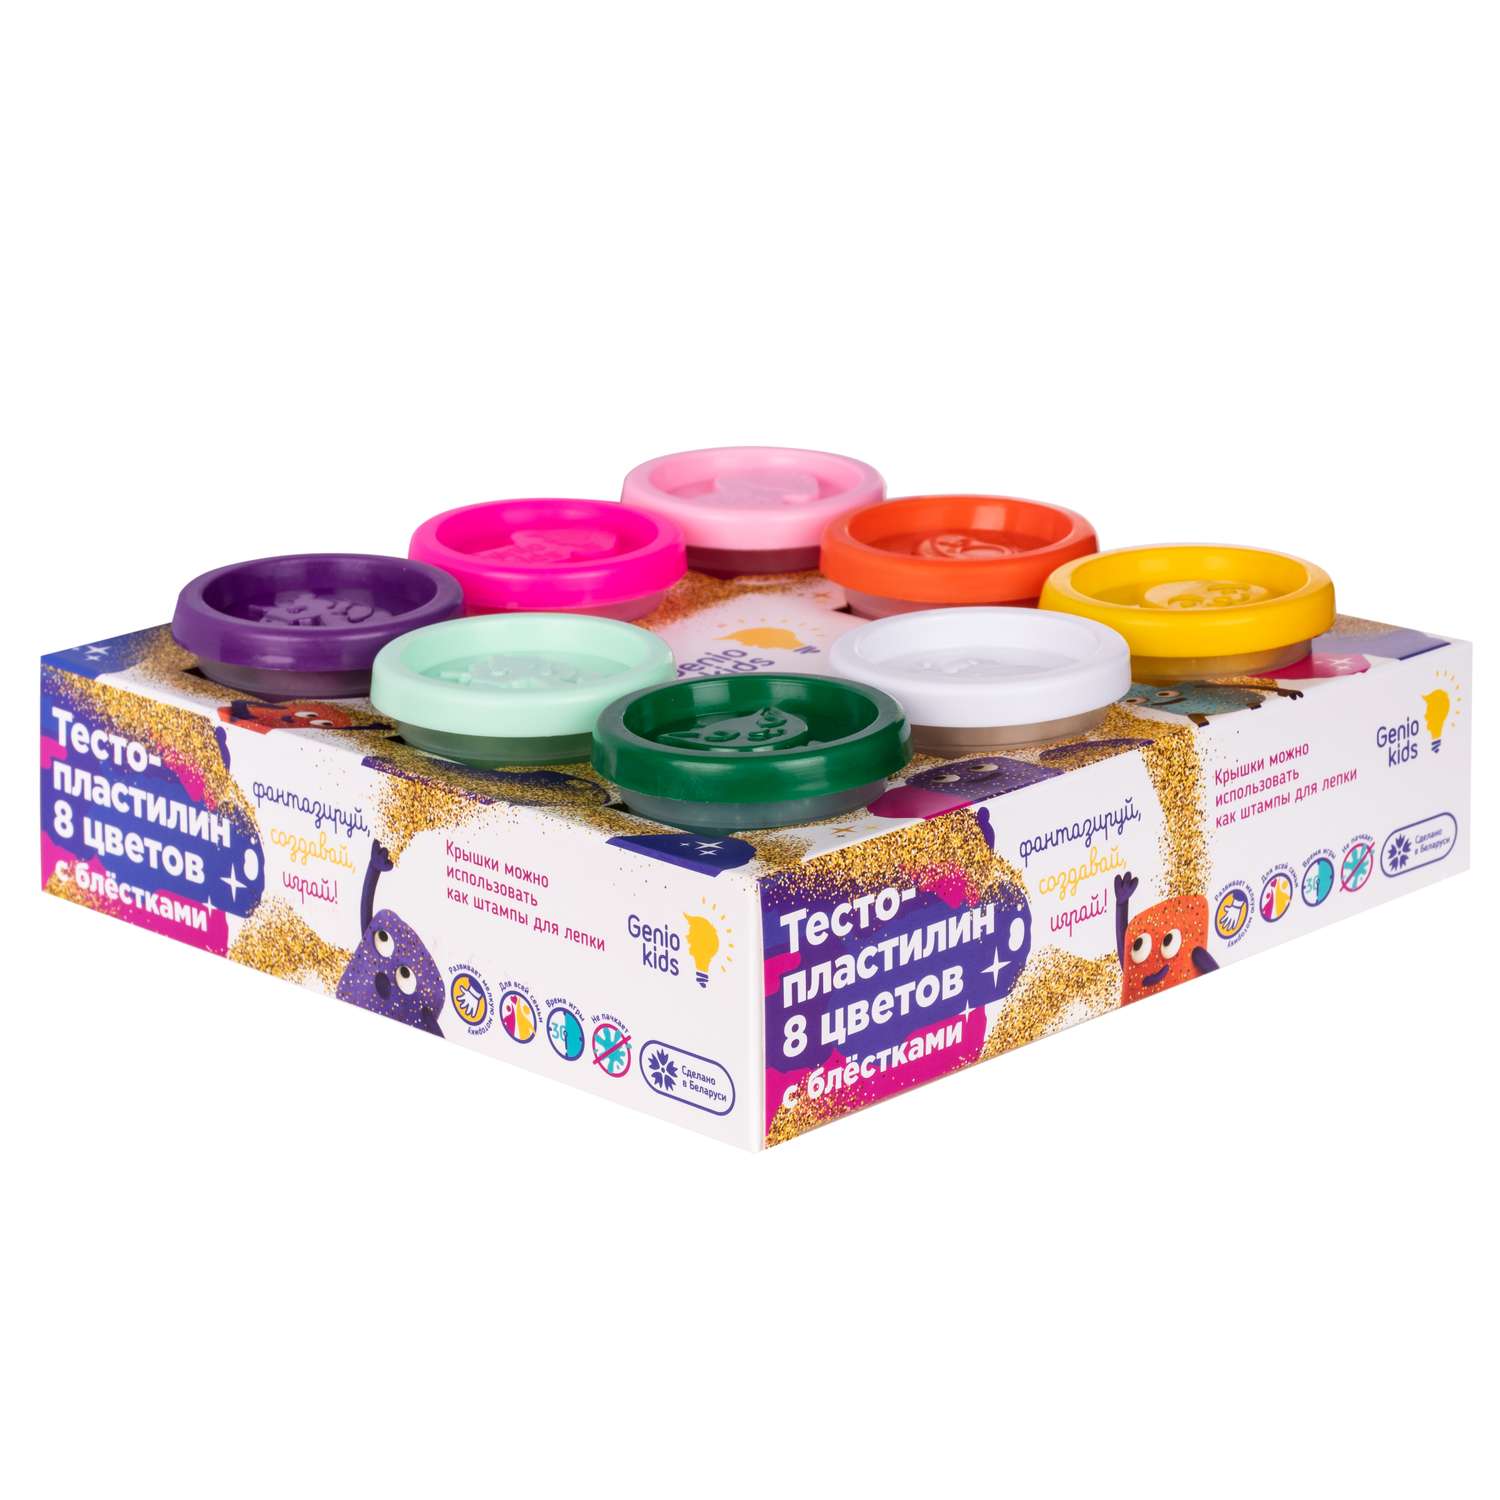 Набор для детской лепки GENIO KIDS Тесто-пластилин с блестками 8 цветов - фото 2